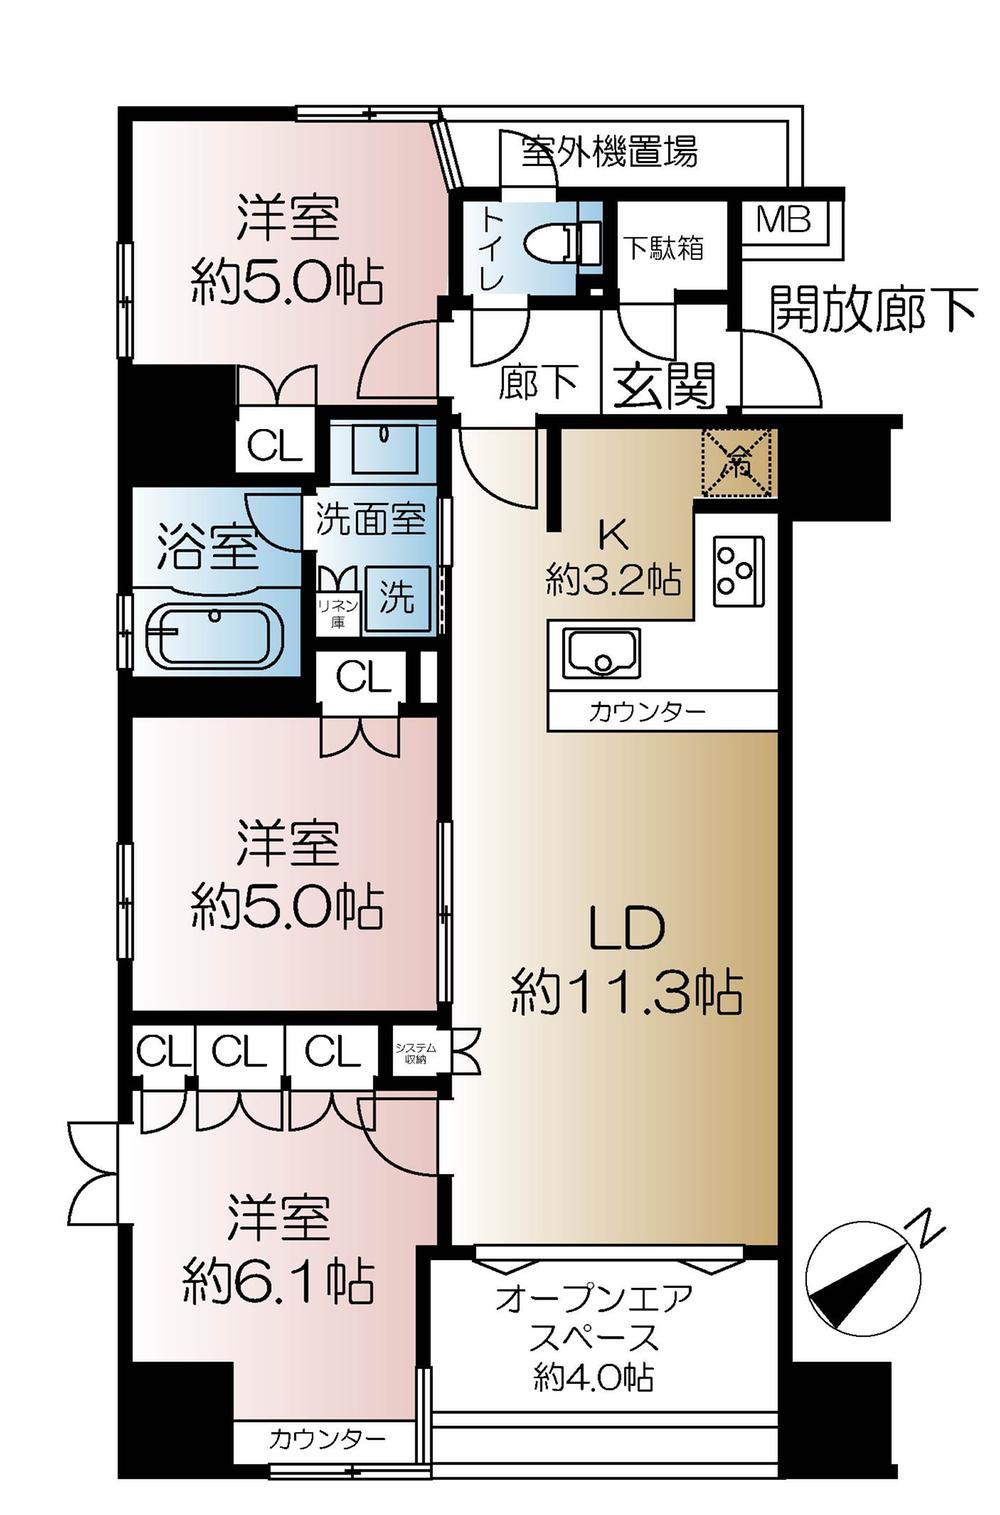 Floor plan. 3LDK, Price 34,800,000 yen, Occupied area 65.03 sq m , Balcony area 6.6 sq m